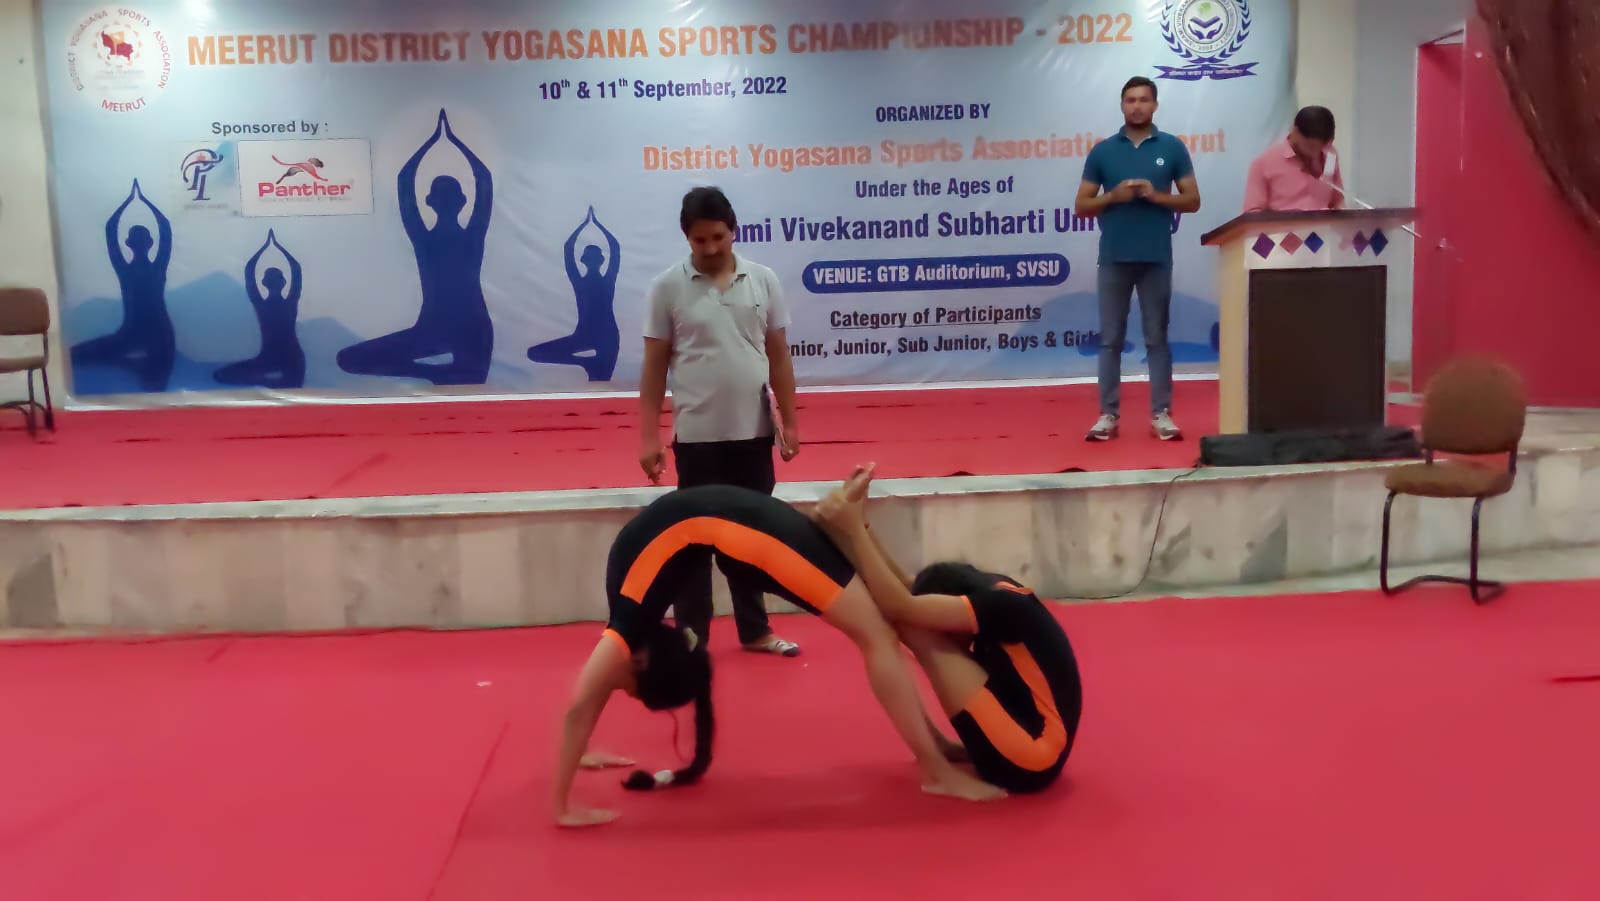 Artistic Yogasana Sports